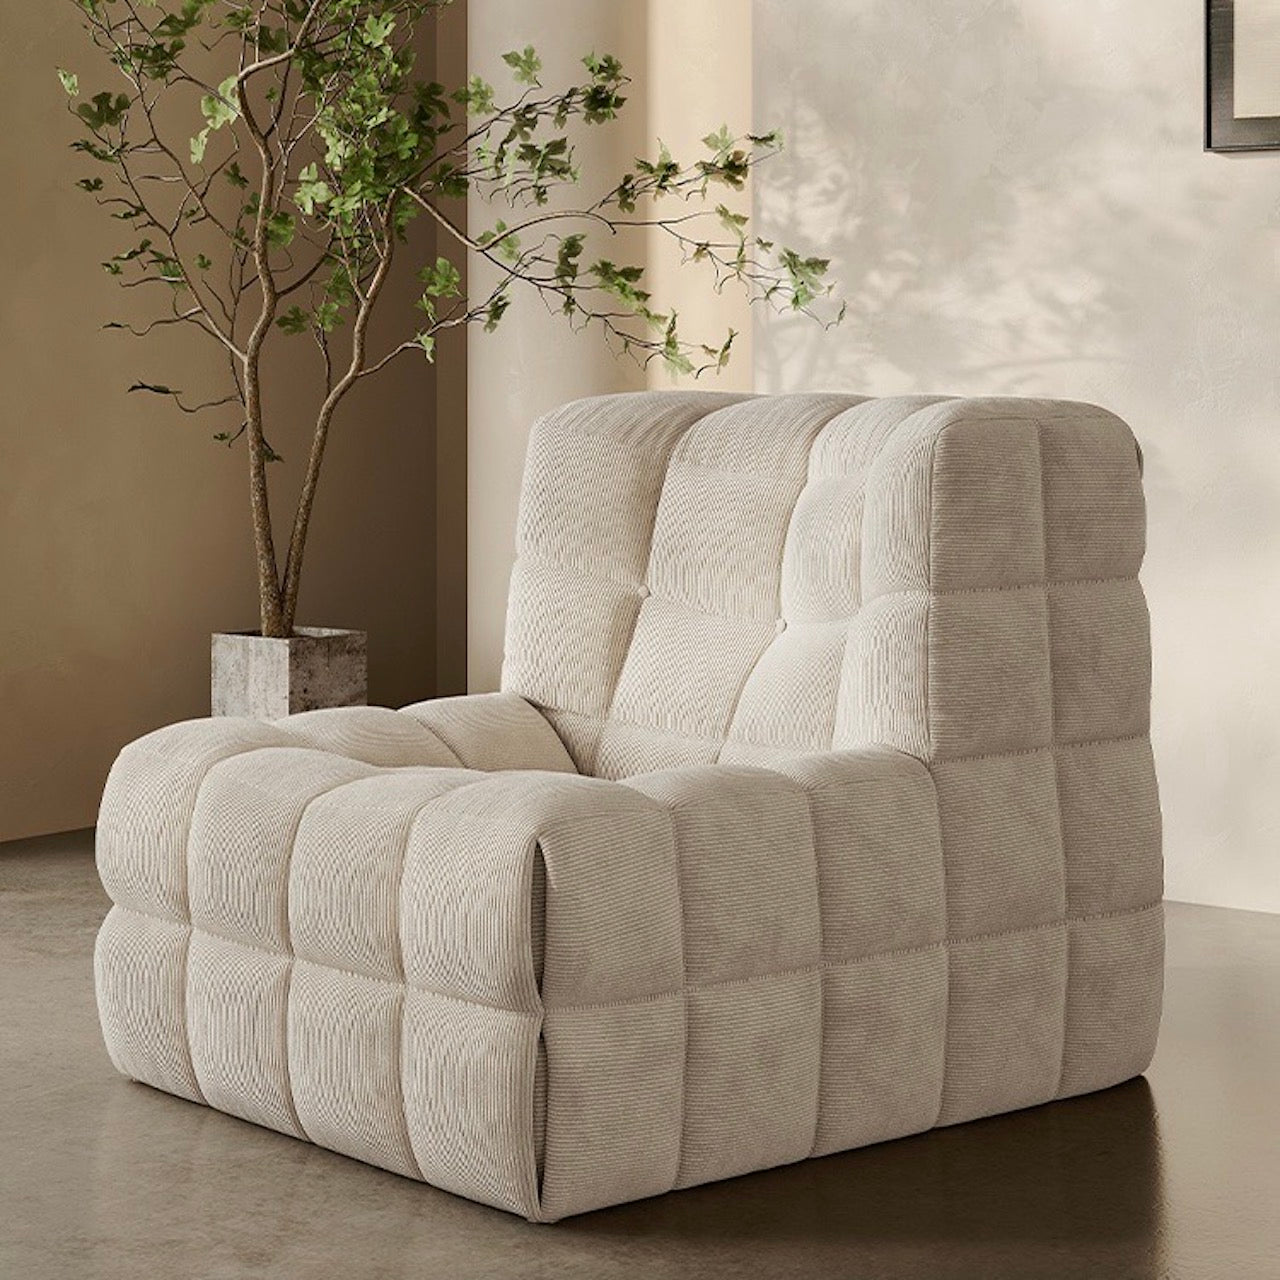 Retro style Beige corduroy lounge chair featuring distinctive tofu block pattern